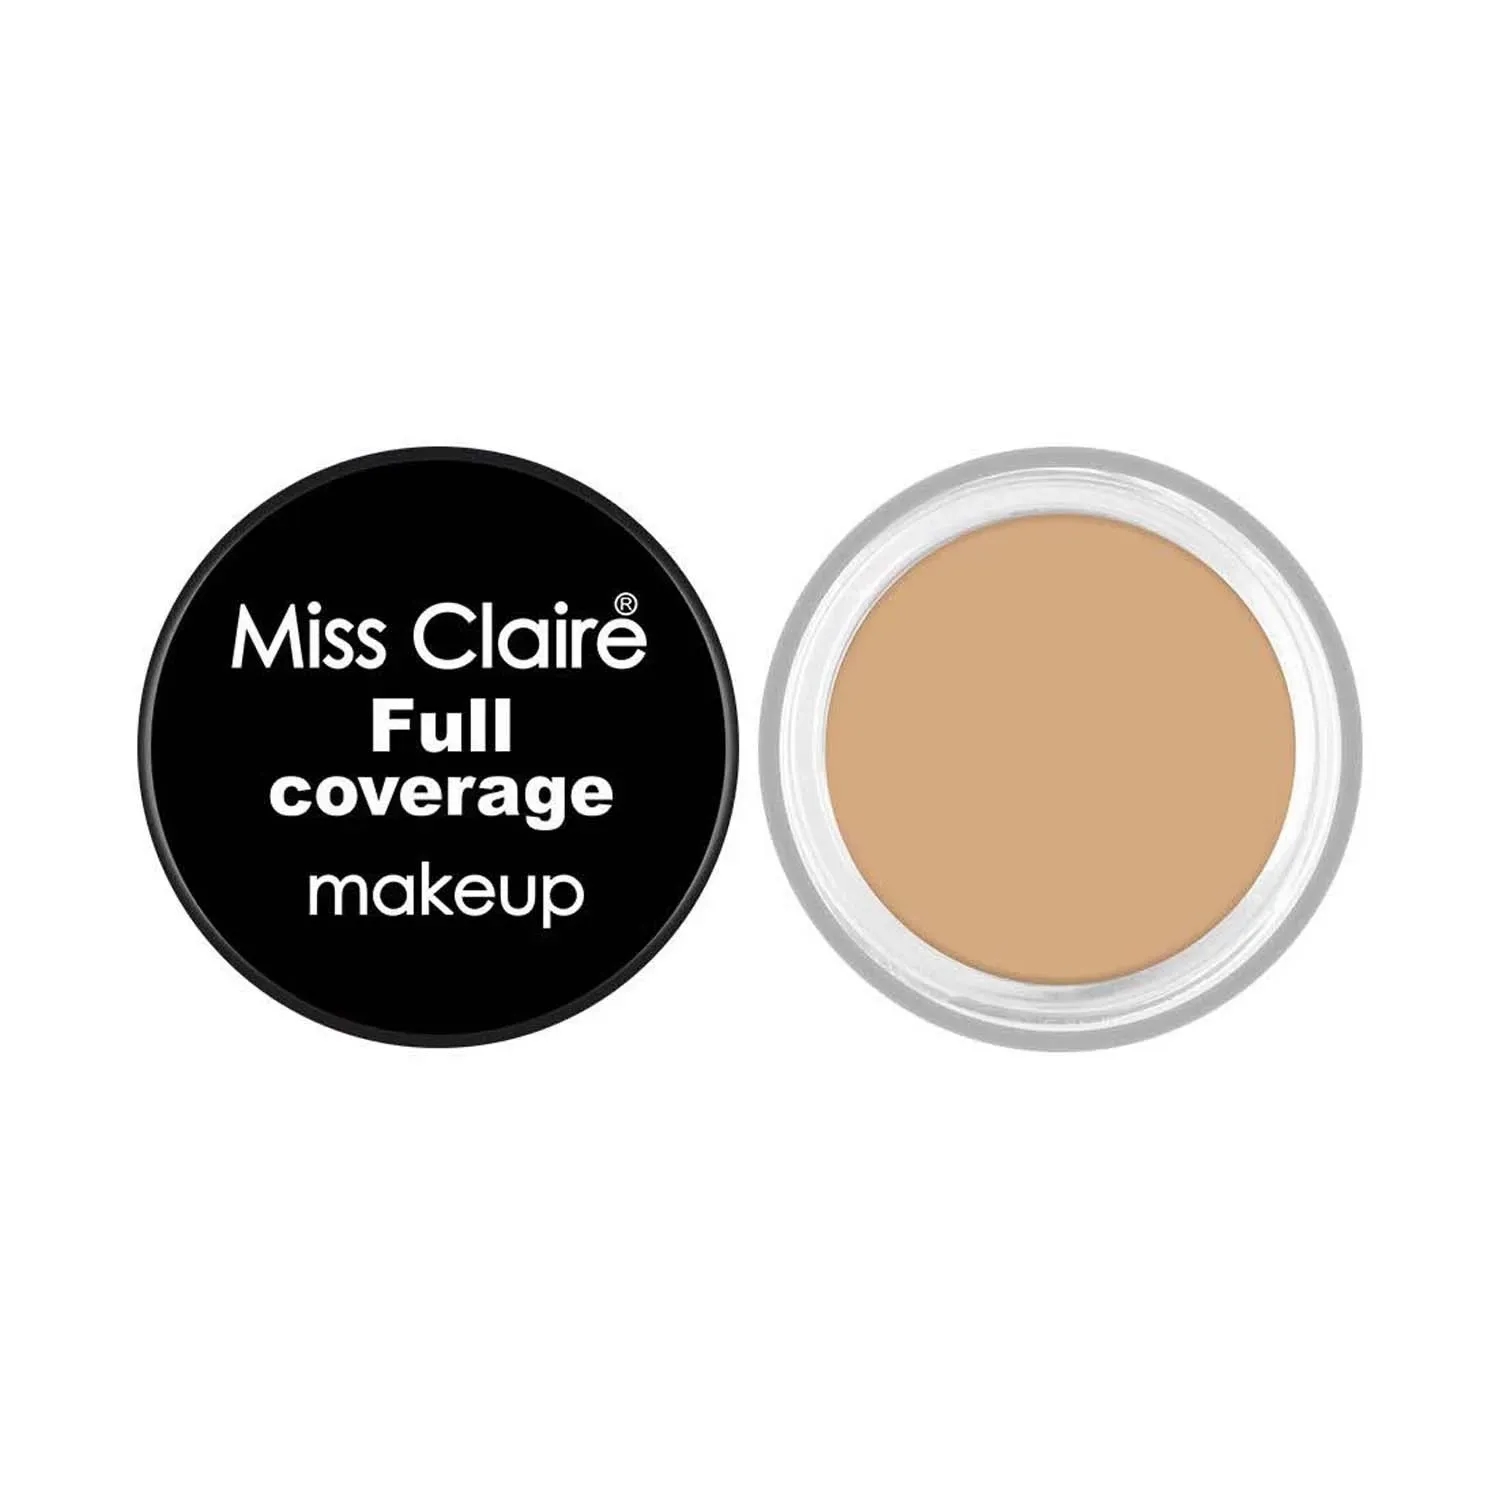 Miss Claire Full Coverage Makeup + Concealer - 7 Natural Beige (6g)